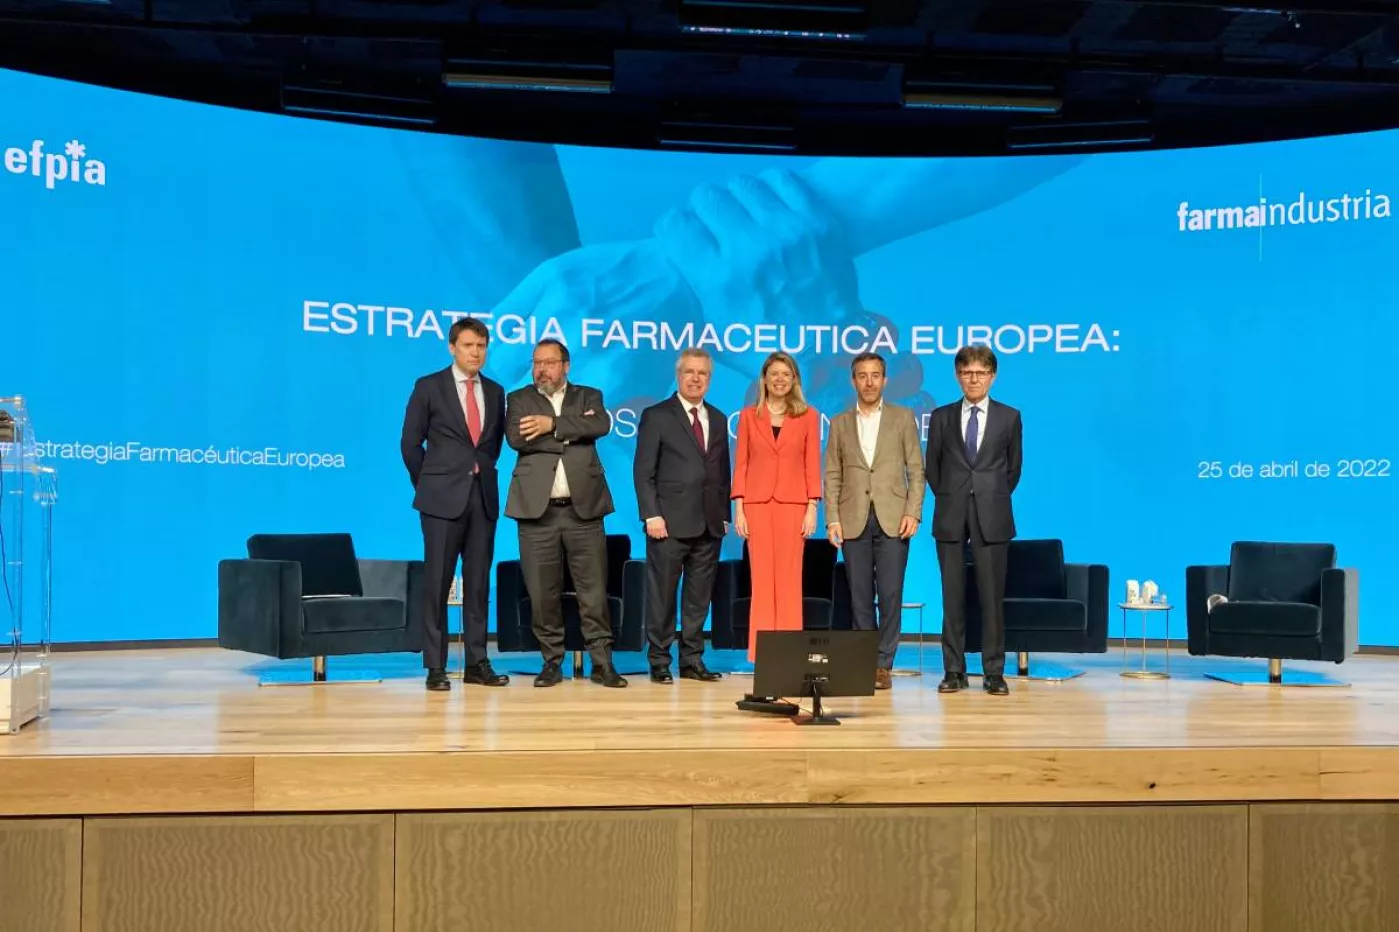 Juan López-Belmonte (Farmaindustria), César Hernández (Aemps), Olivier Laureau (Efpia), Nathalie Moll (Efpia), Pedro Carrascal (Esclerosis Múltiple España) y Humberto Arnés (Farmaindustria).